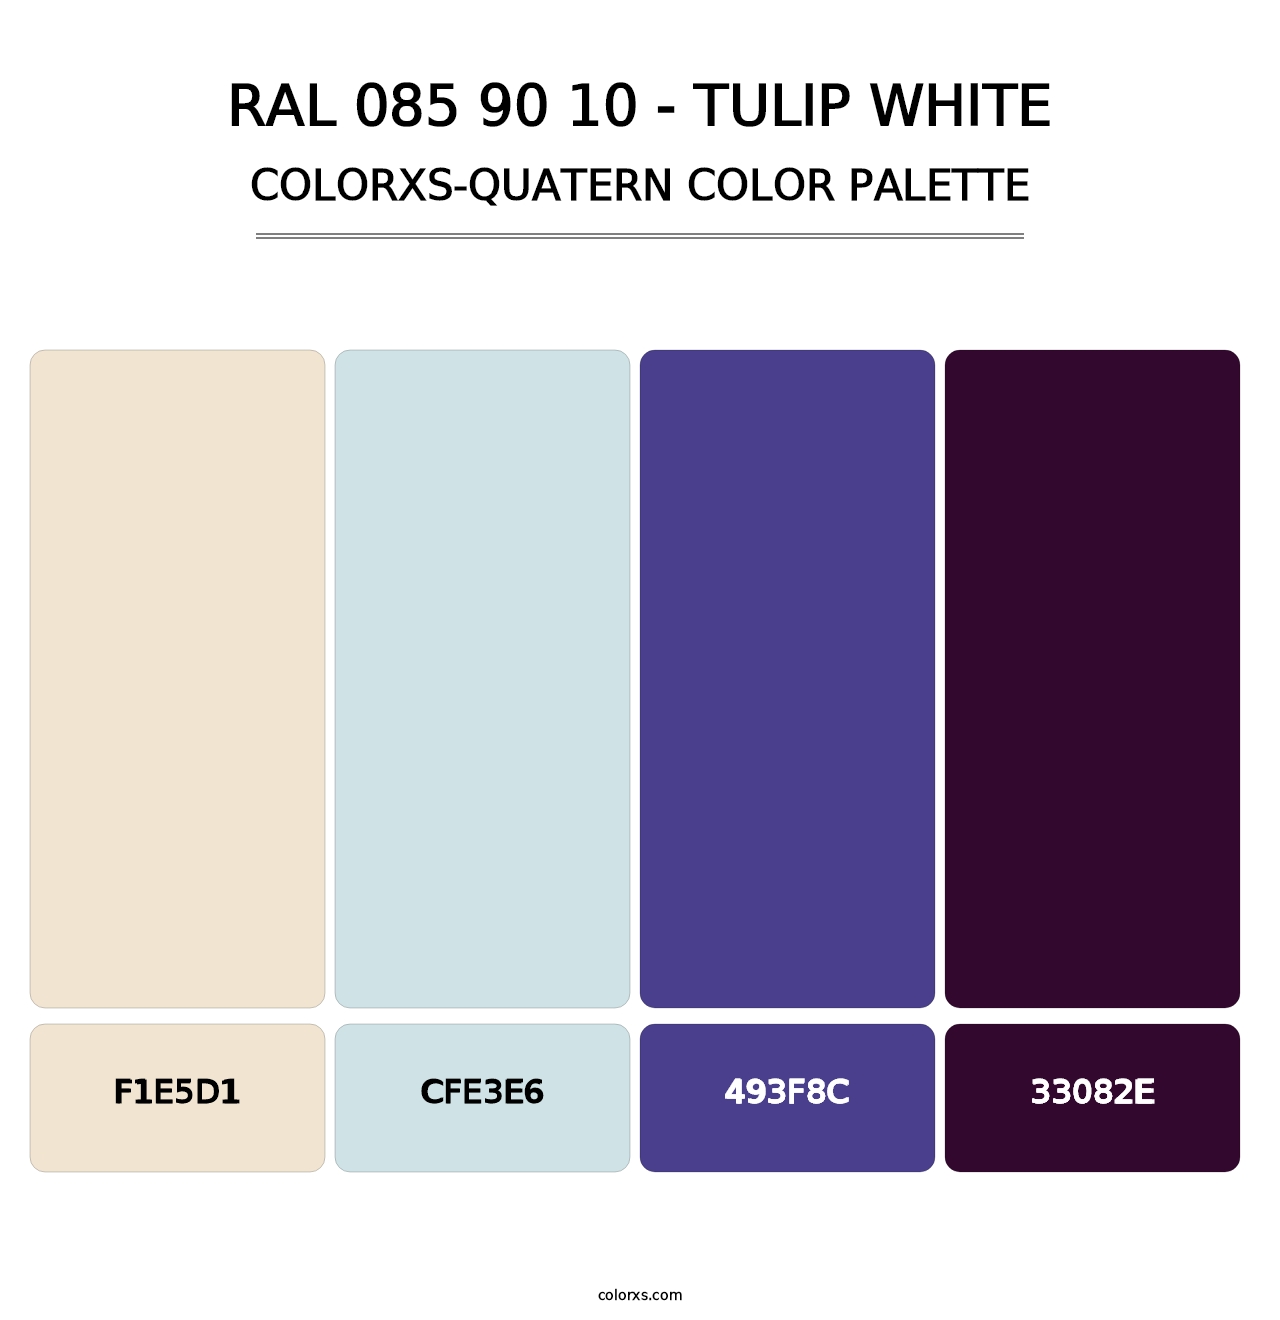 RAL 085 90 10 - Tulip White - Colorxs Quatern Palette